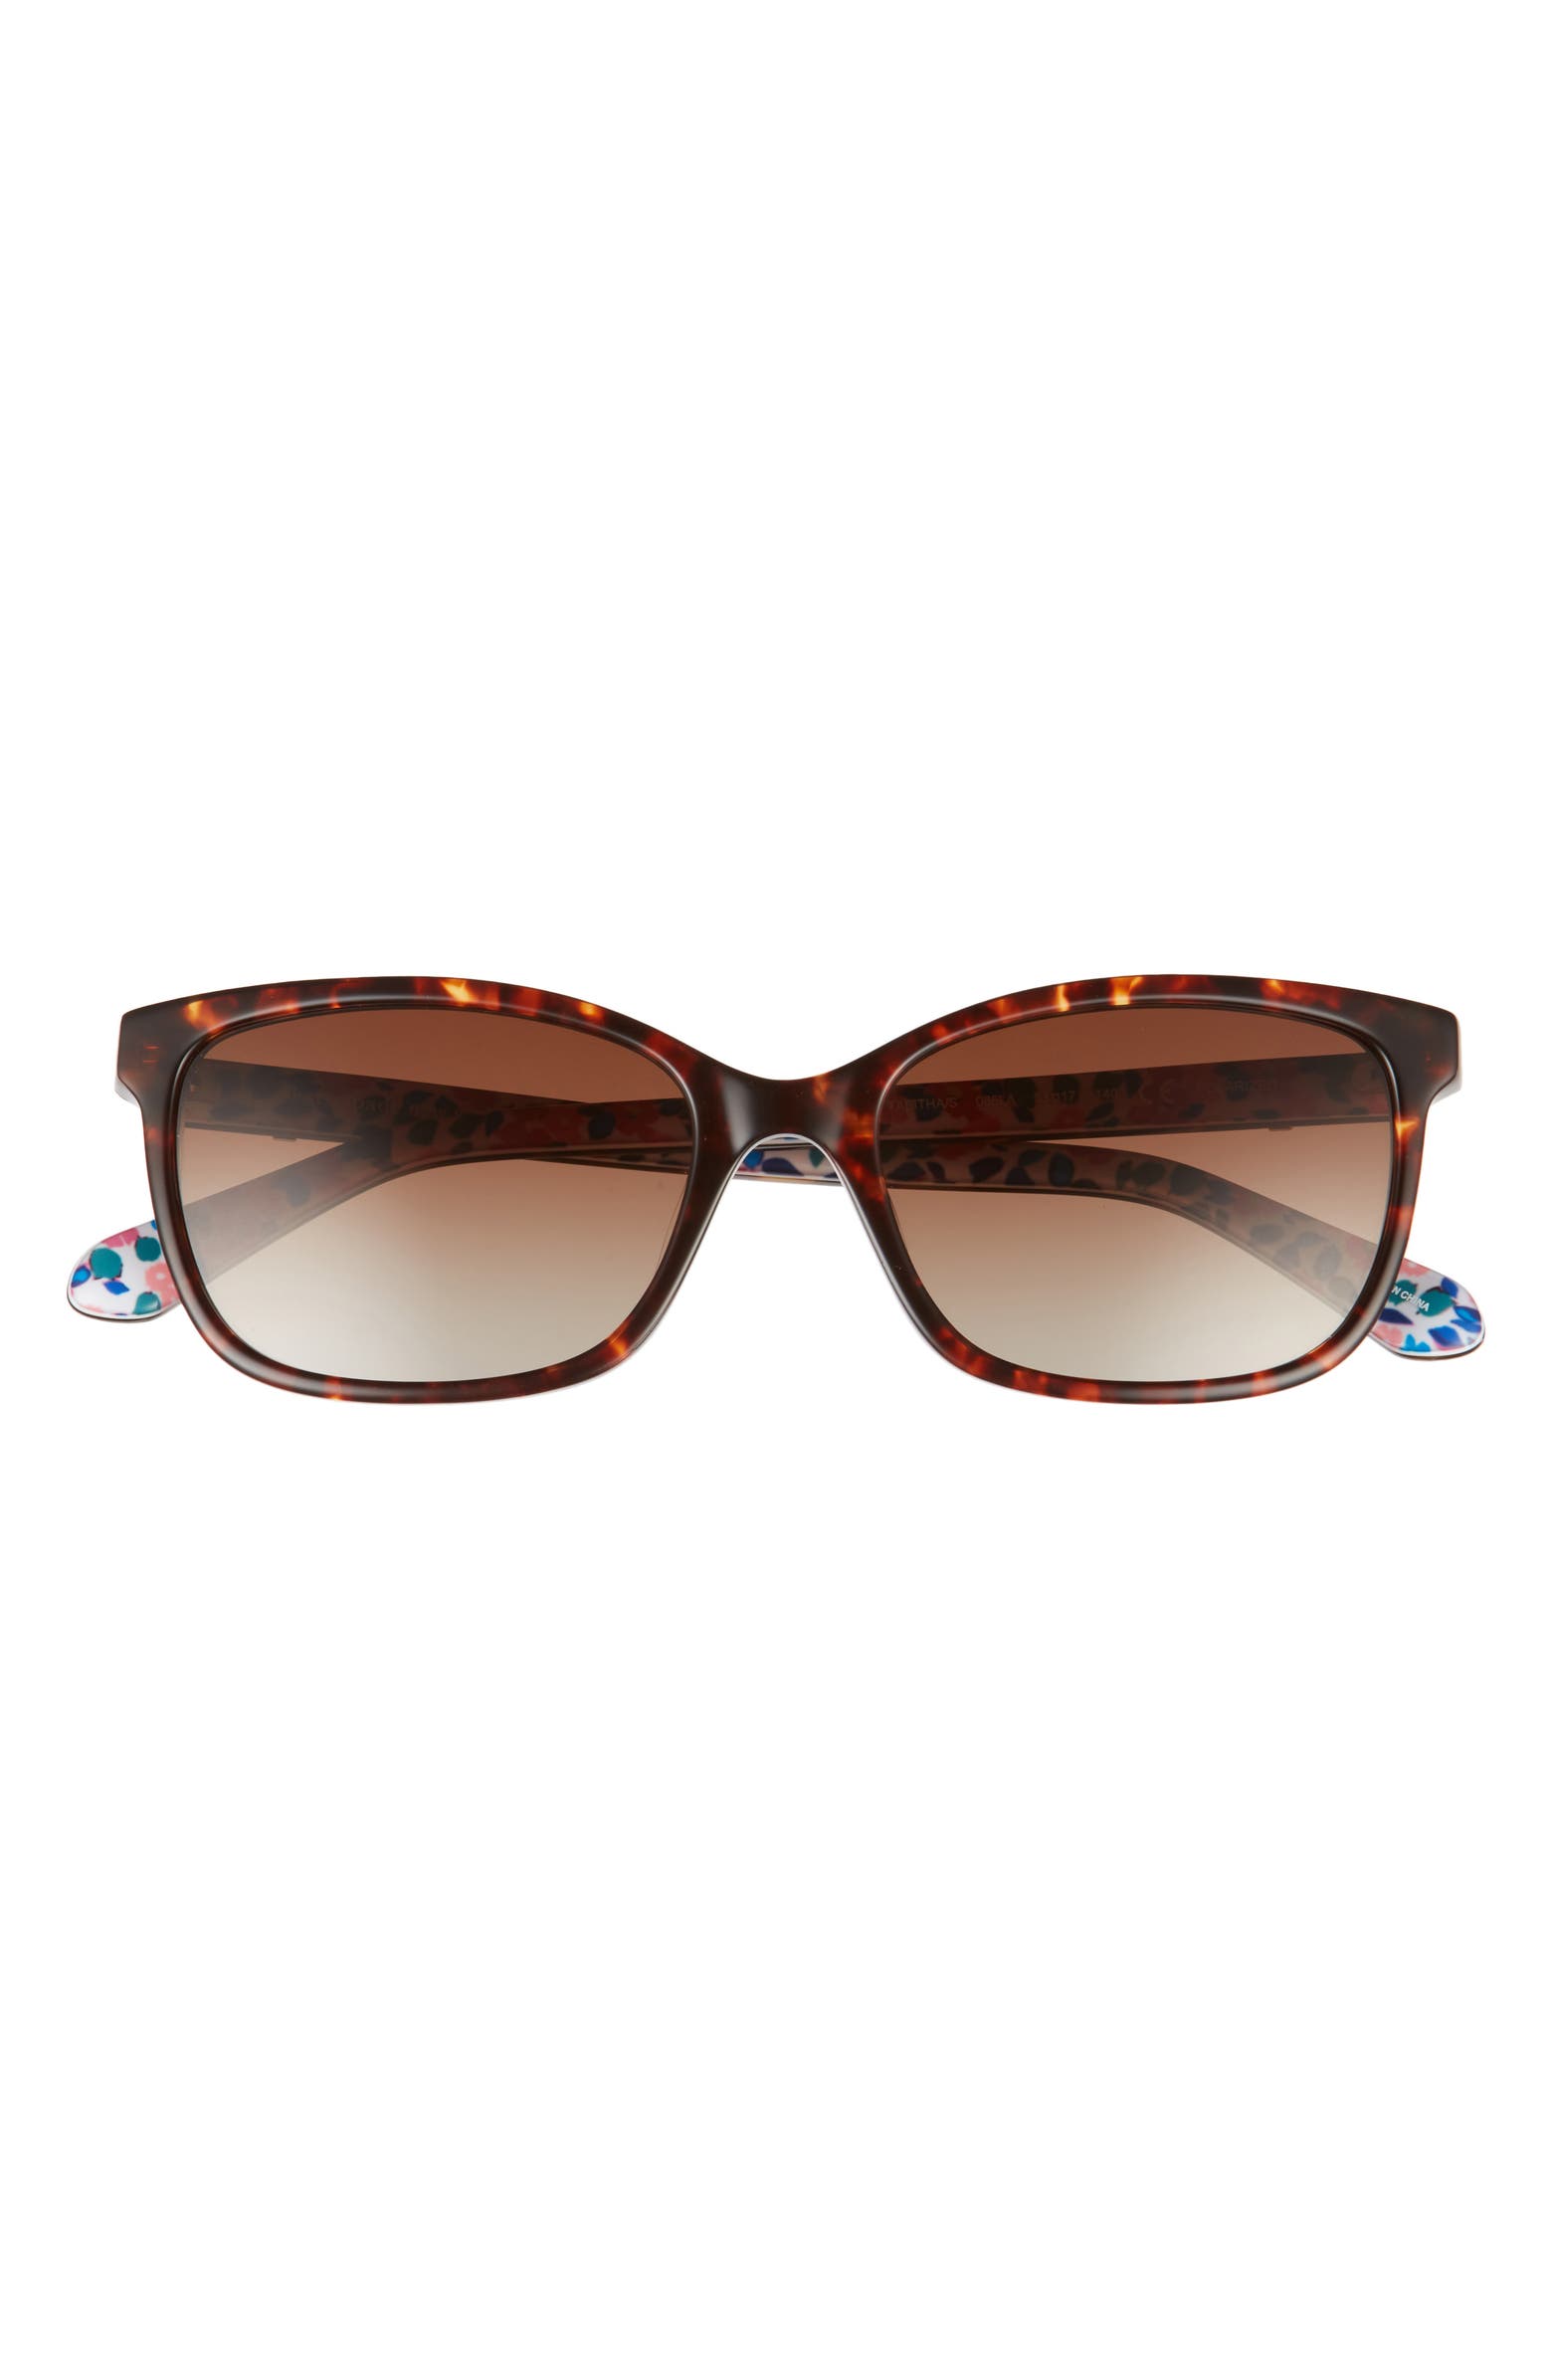 Kate Spade New York Tabitha 53mm Polarized Rectangular Sunglasses Nordstrom